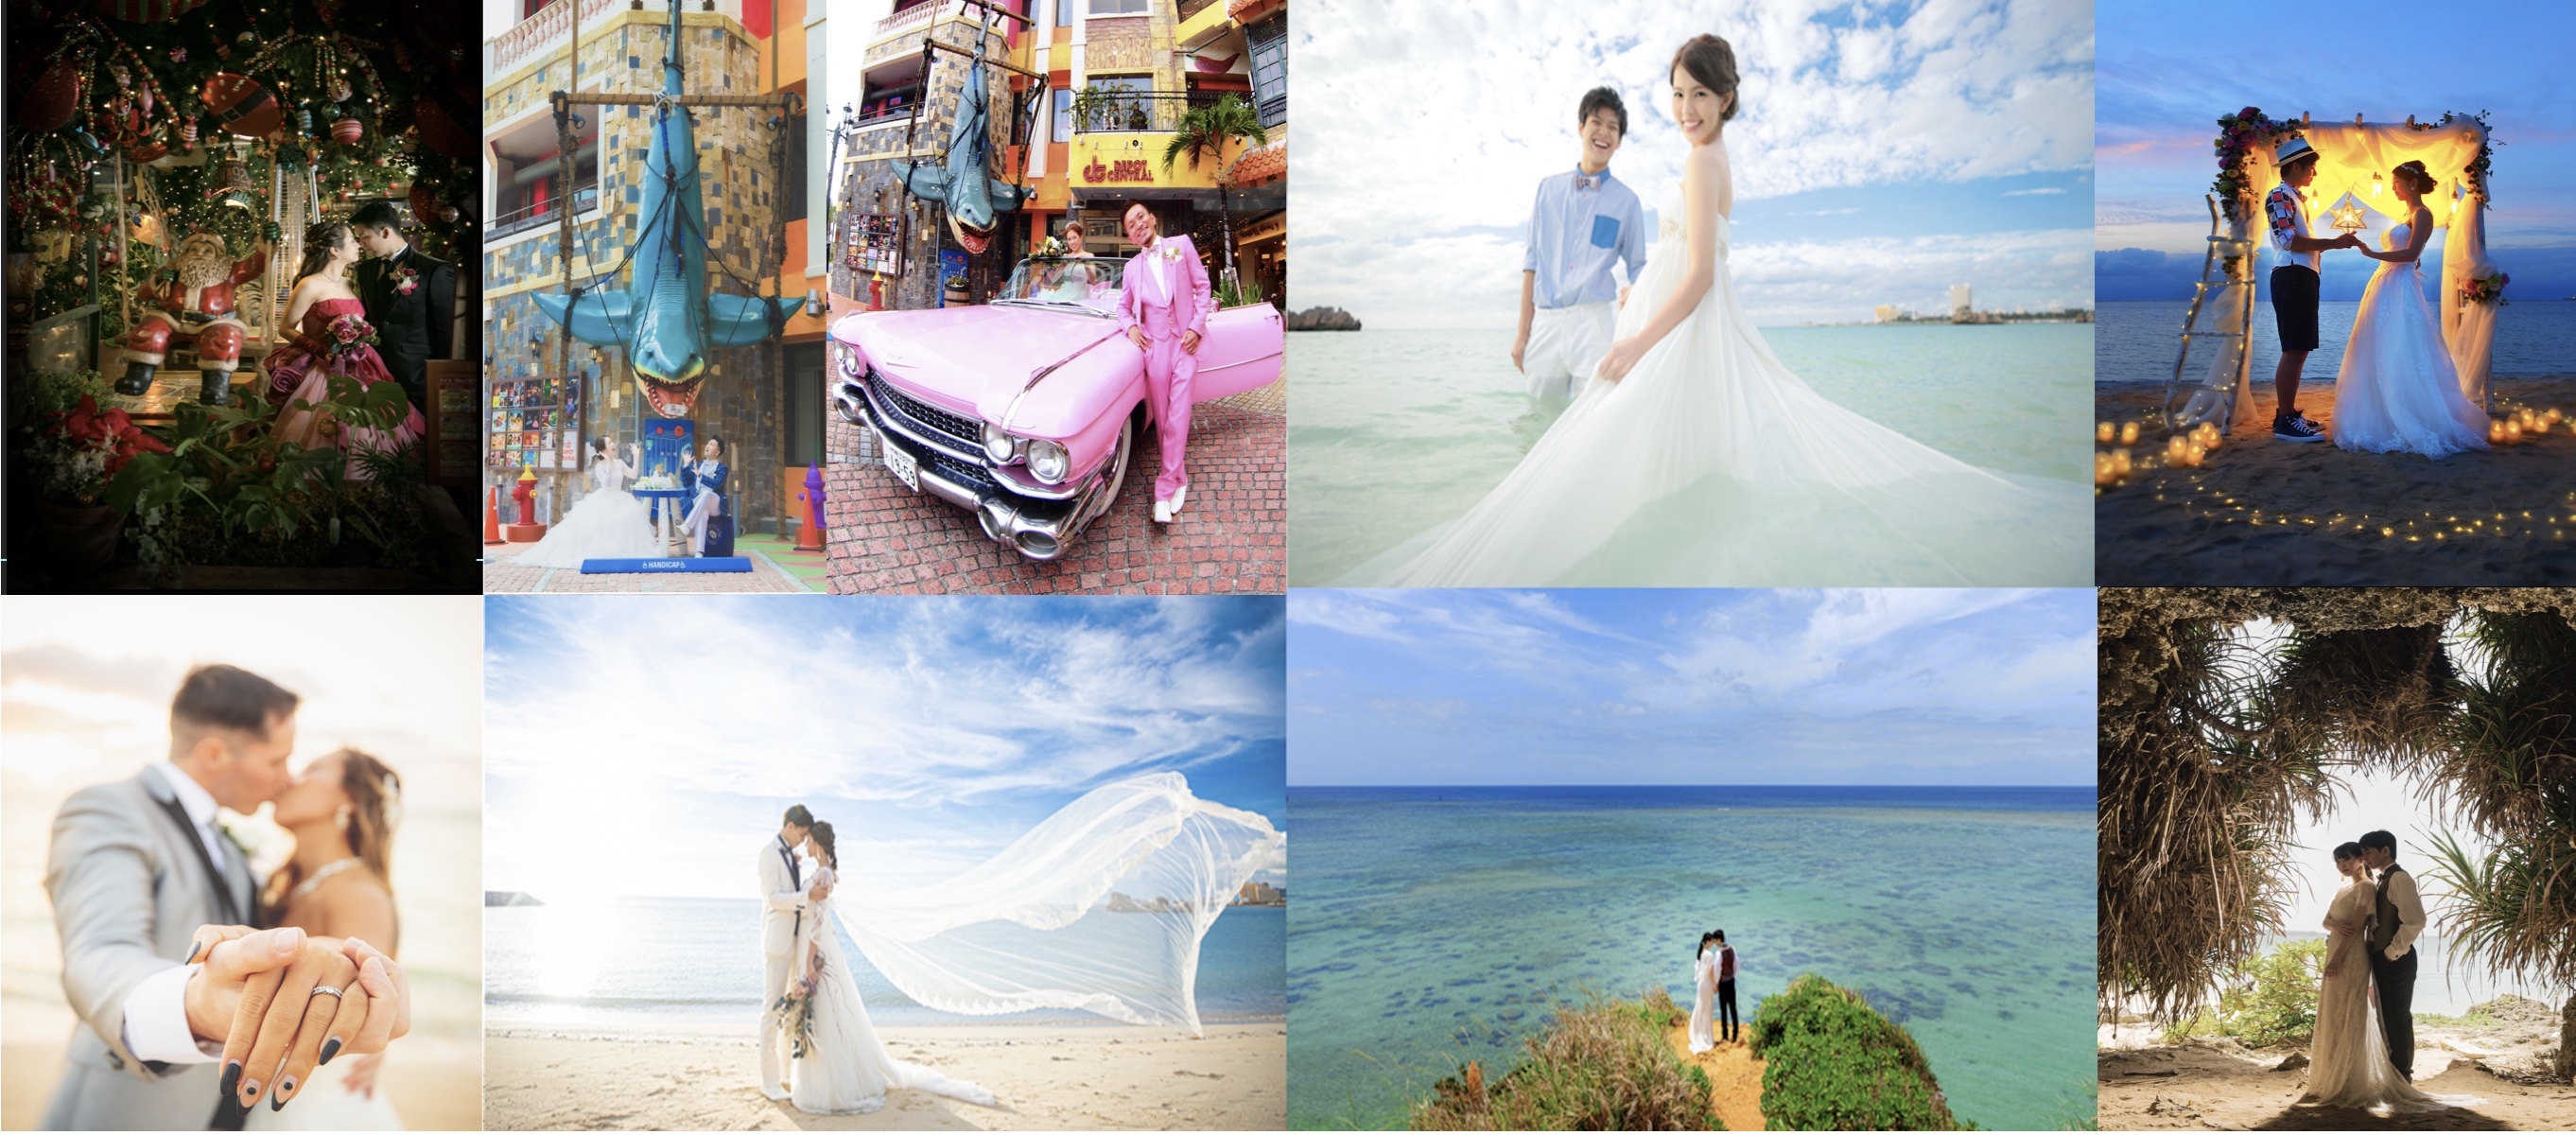 In Okinawa! Photo wedding/popular spots [Chatan & central main island]